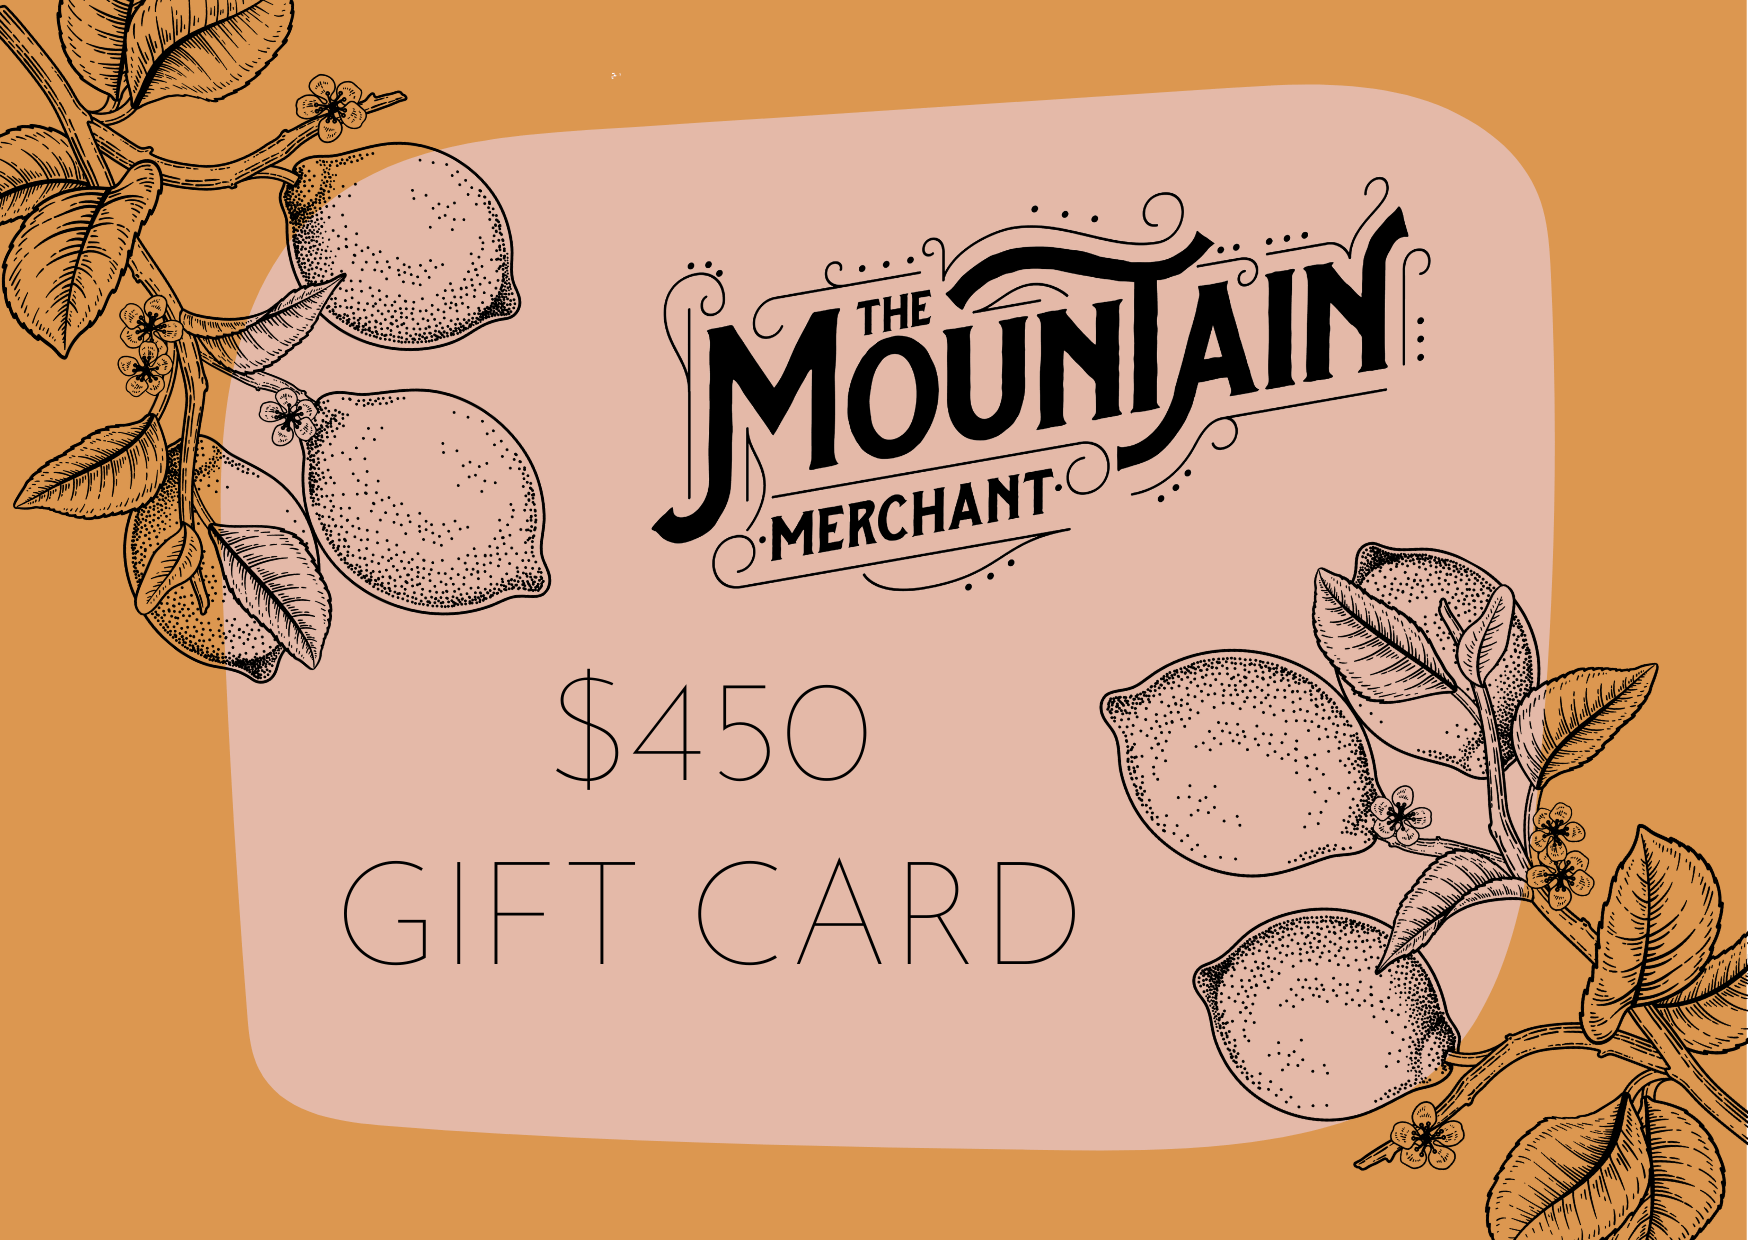 The Mountain Merchant - Gift Card $450 -The Mountain Merchant -The Mountain Merchant